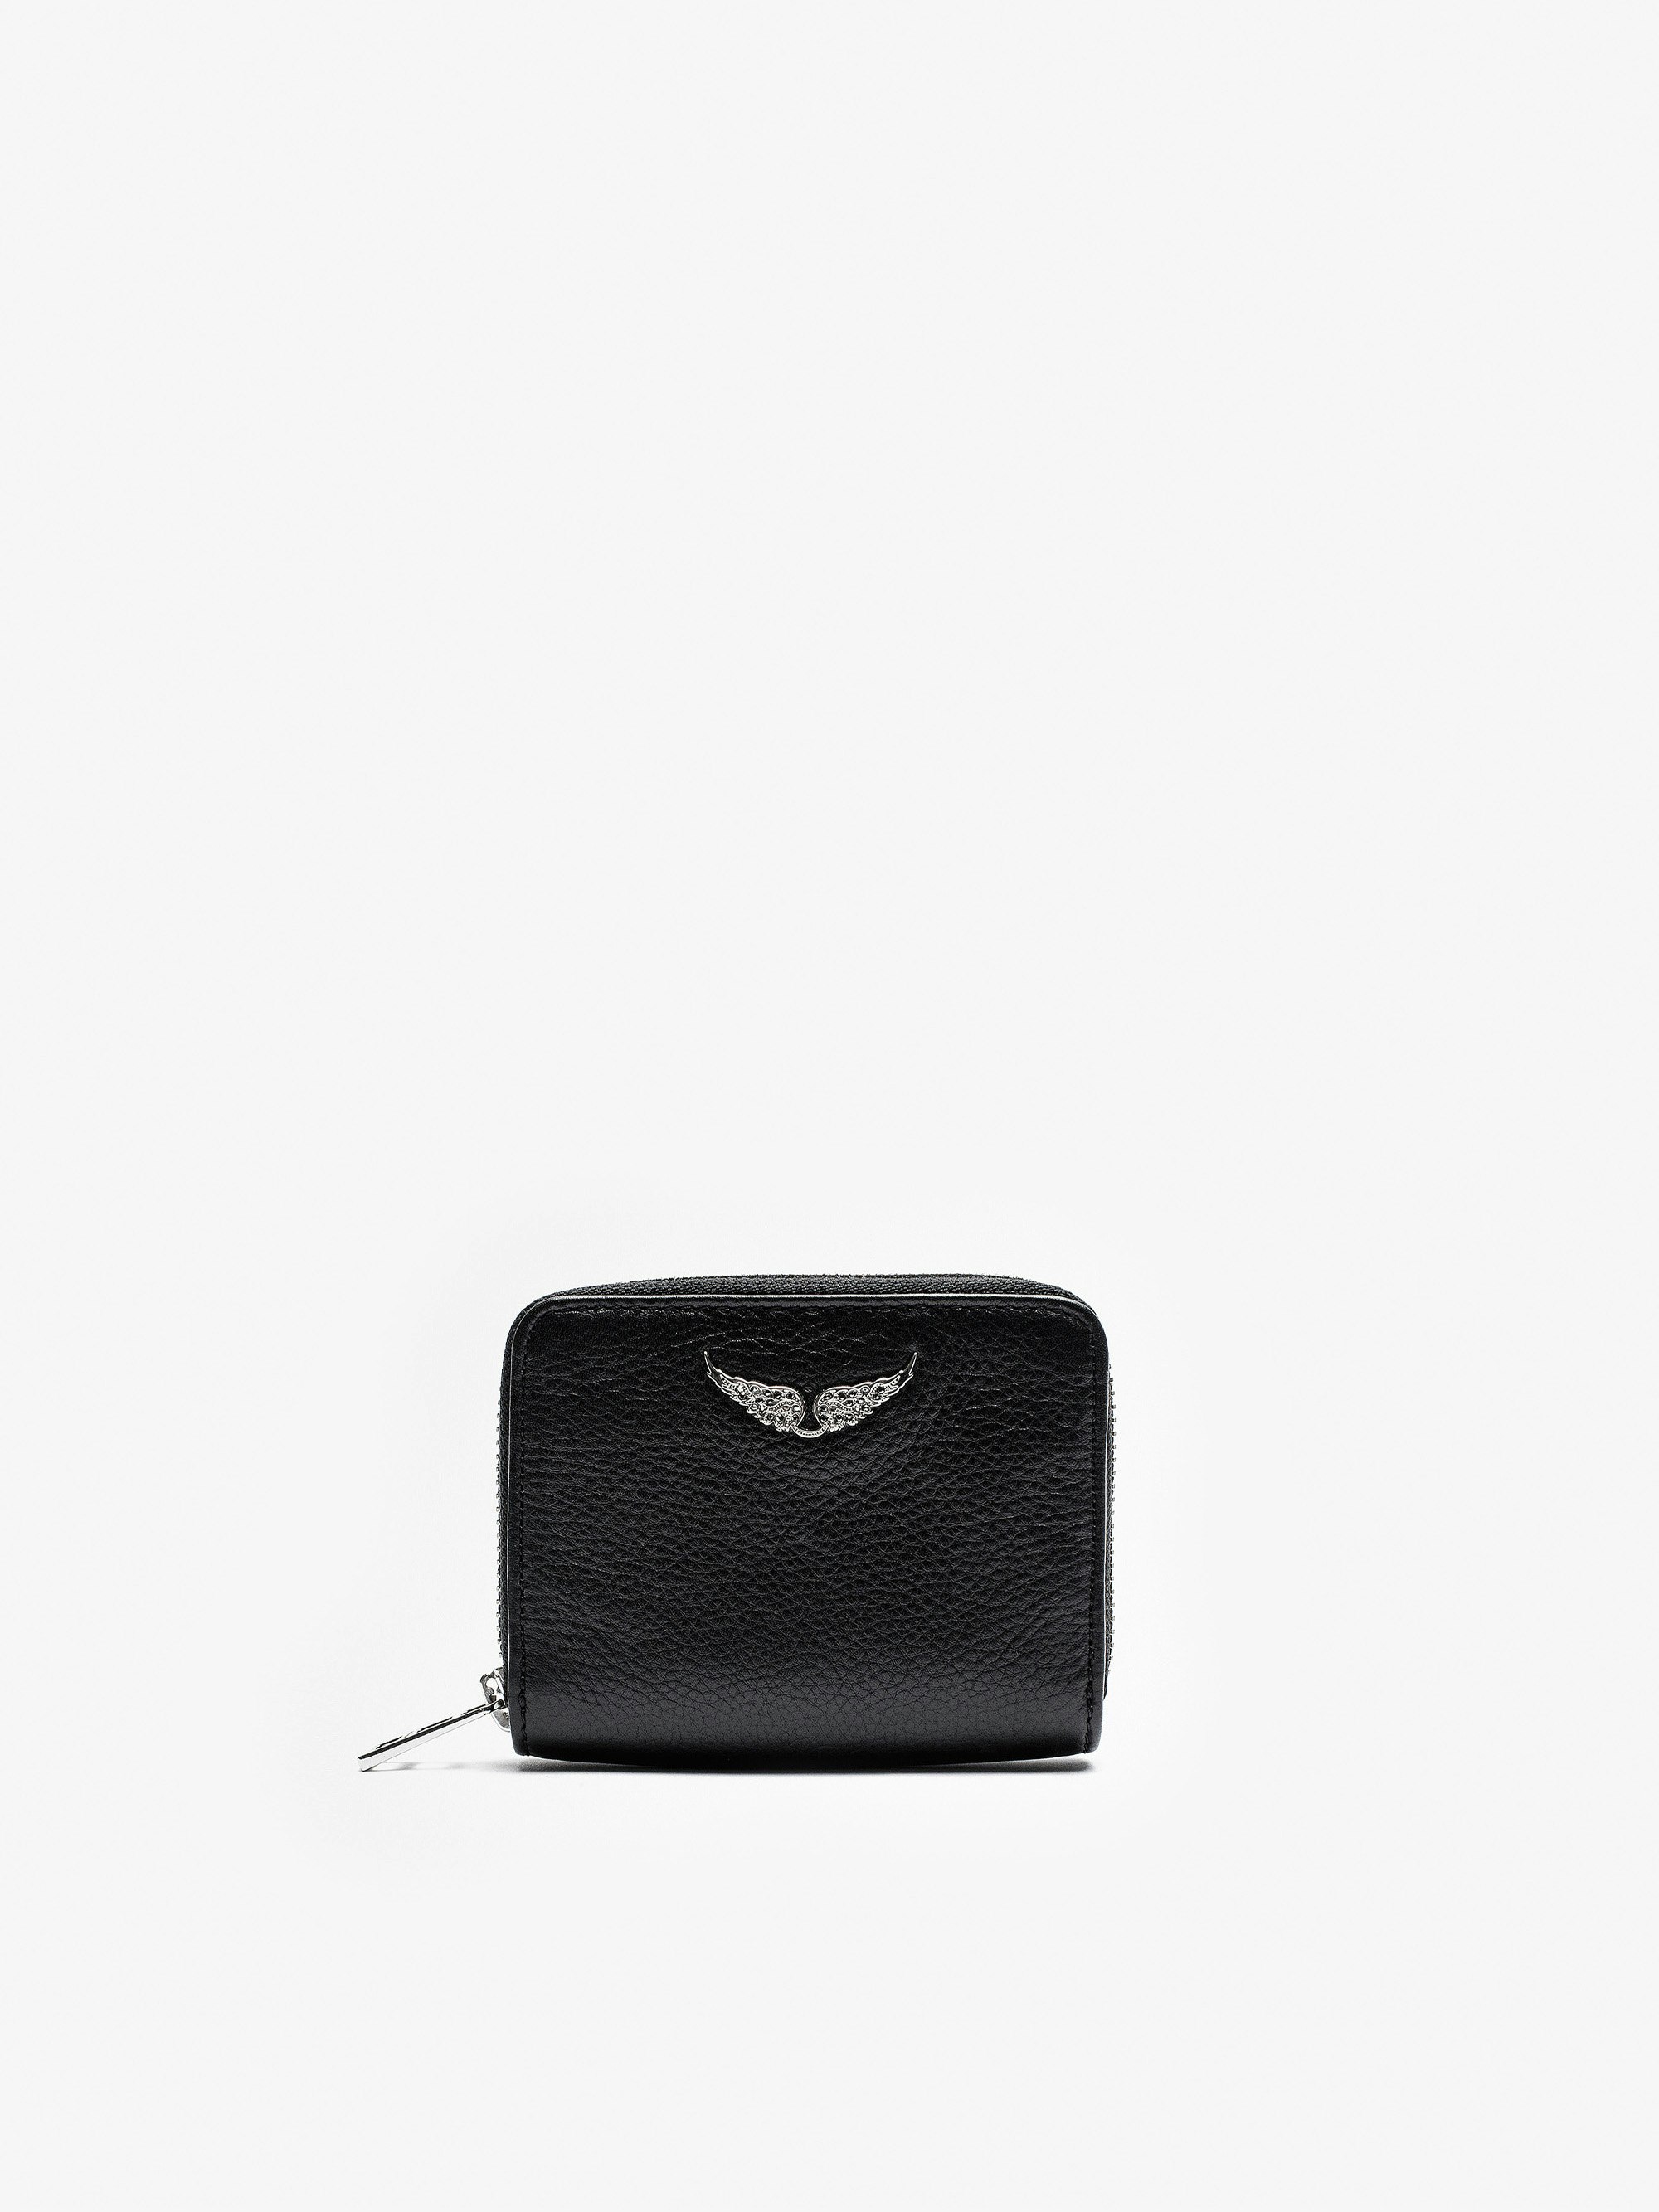 Mini ZV Wallet - Mini ZV women’s black leather purse.